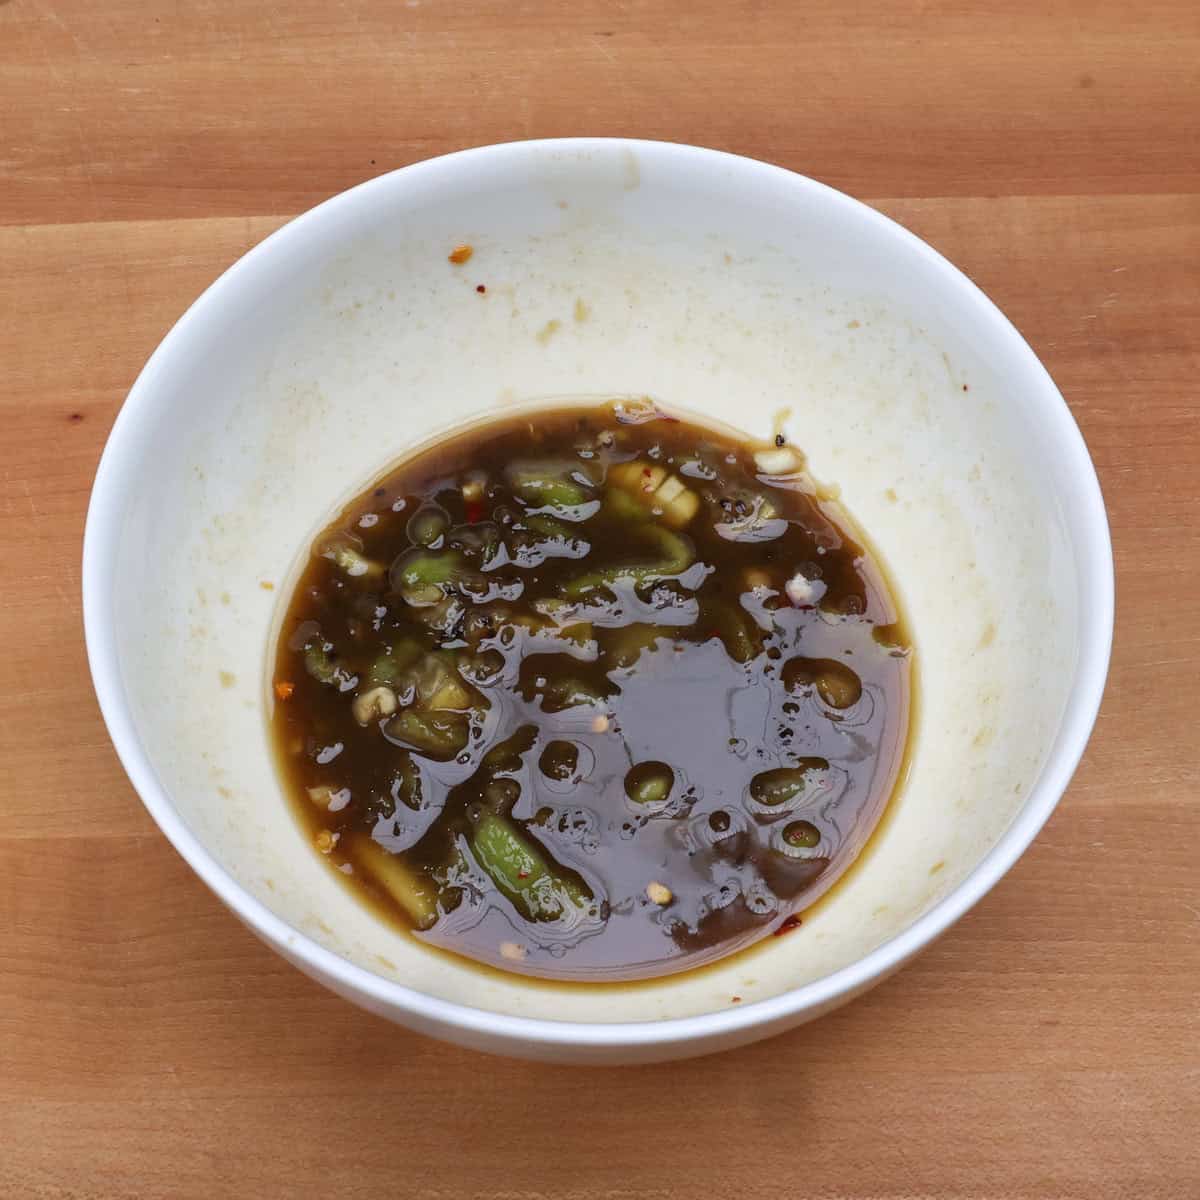 beef bulgogi marinade in a small bowl.